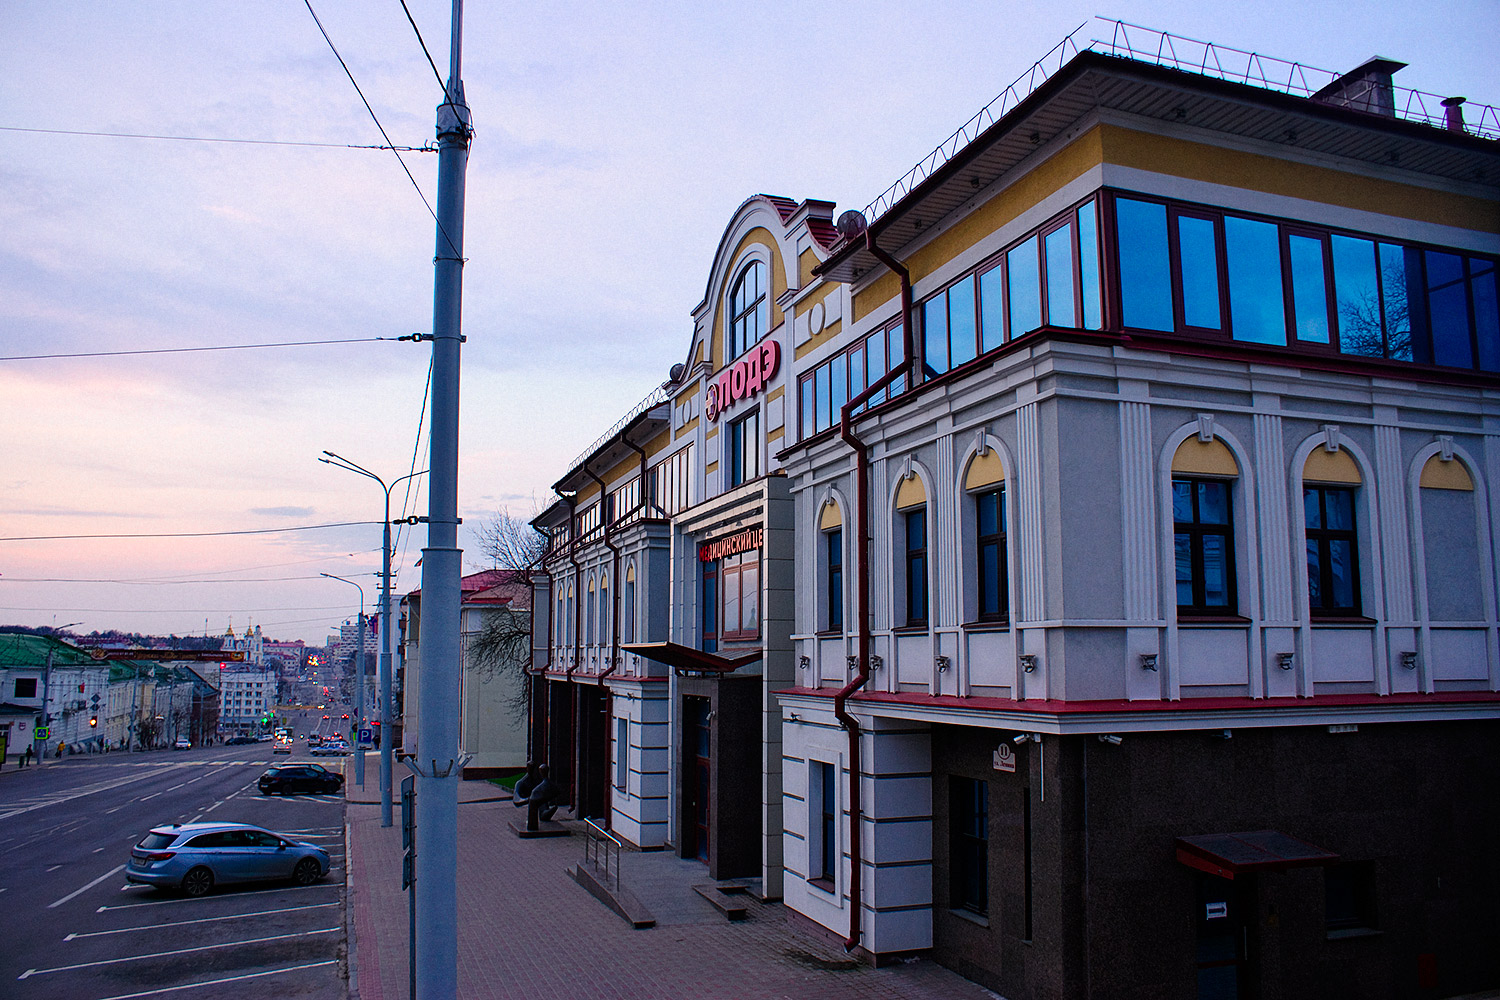 Здание медицинского центра с вывеской «Лодэ» в центре Витебска. Фото Сергея Серебро